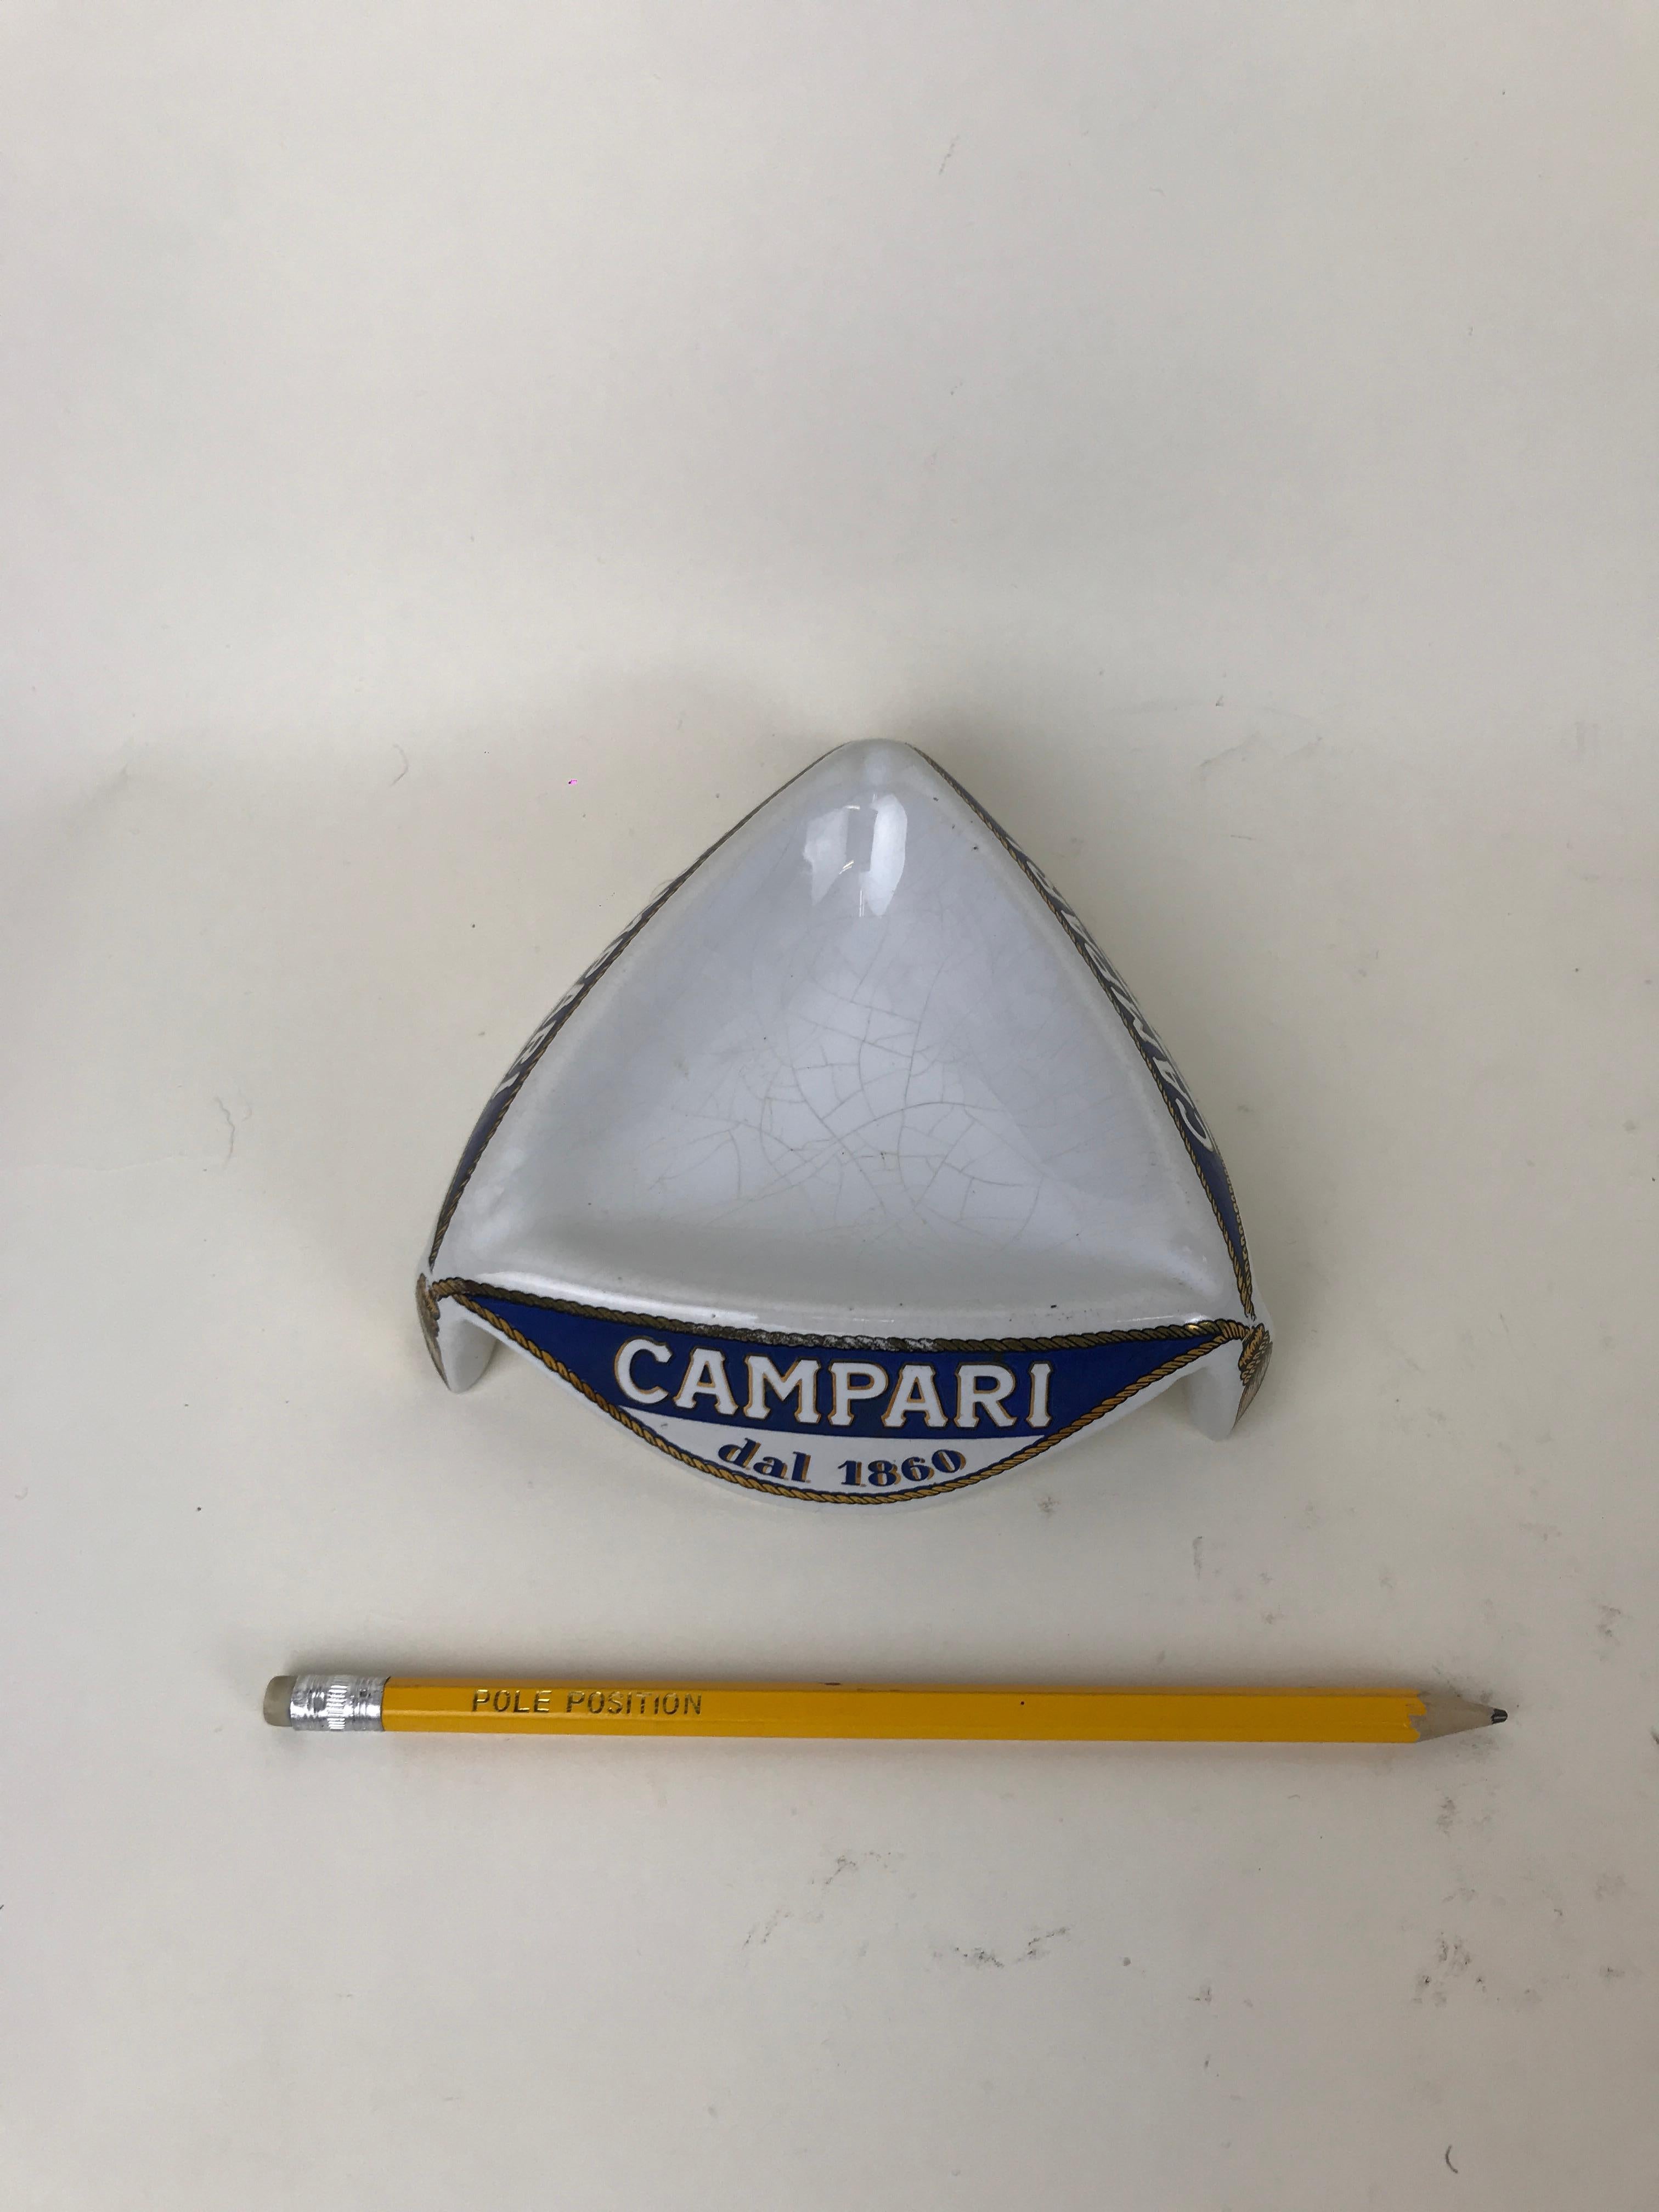 Vintage Campari advertising ashtray in ceramic made in Italy by Ceramica E Piola in Carpignano Sesia, Novara in the 1960s.

The ashtray is decorated with three 